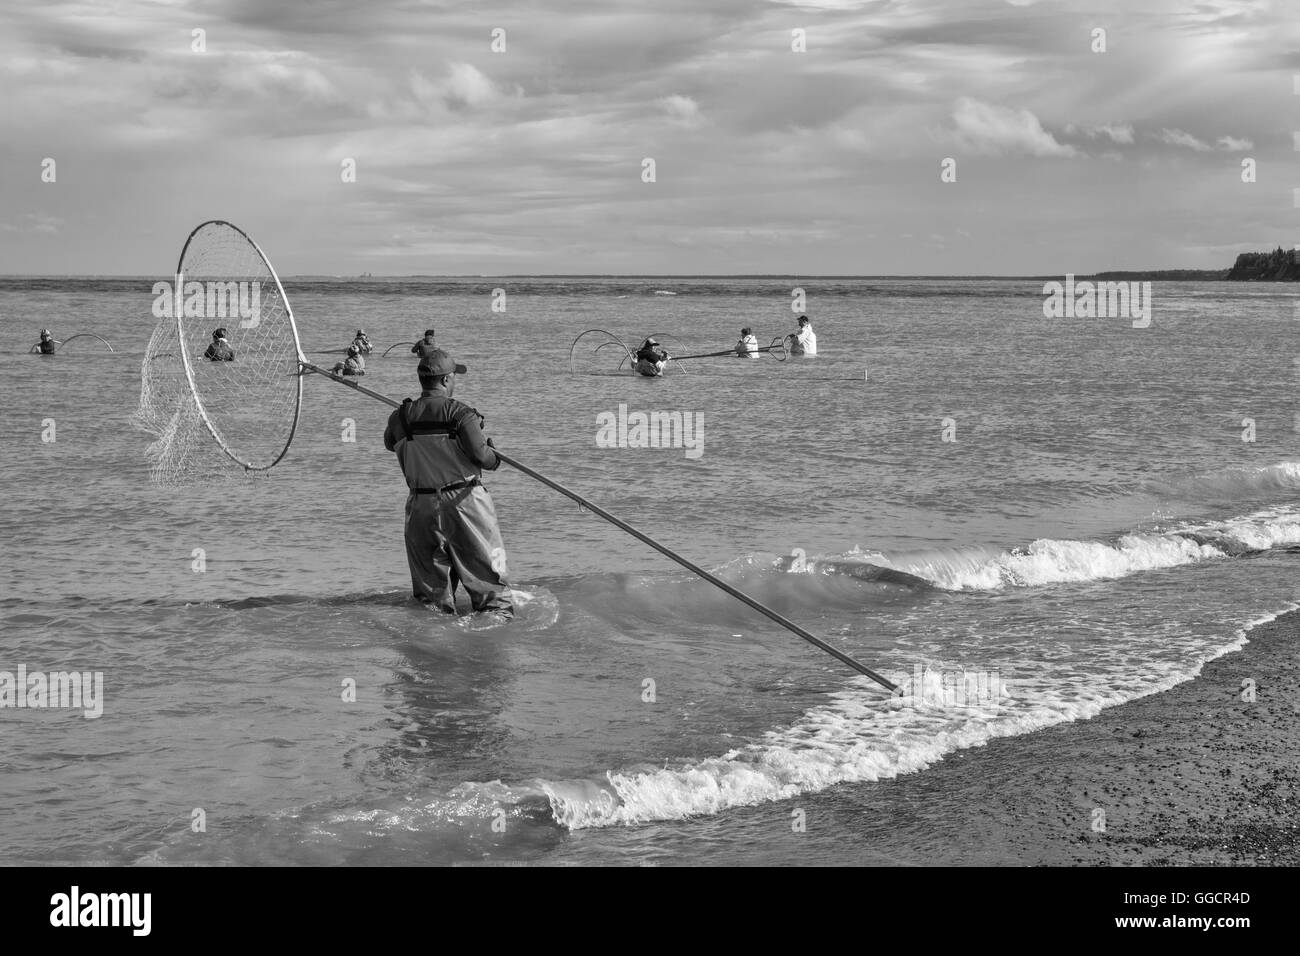 Fishermen Black and White Stock Photos & Images - Alamy